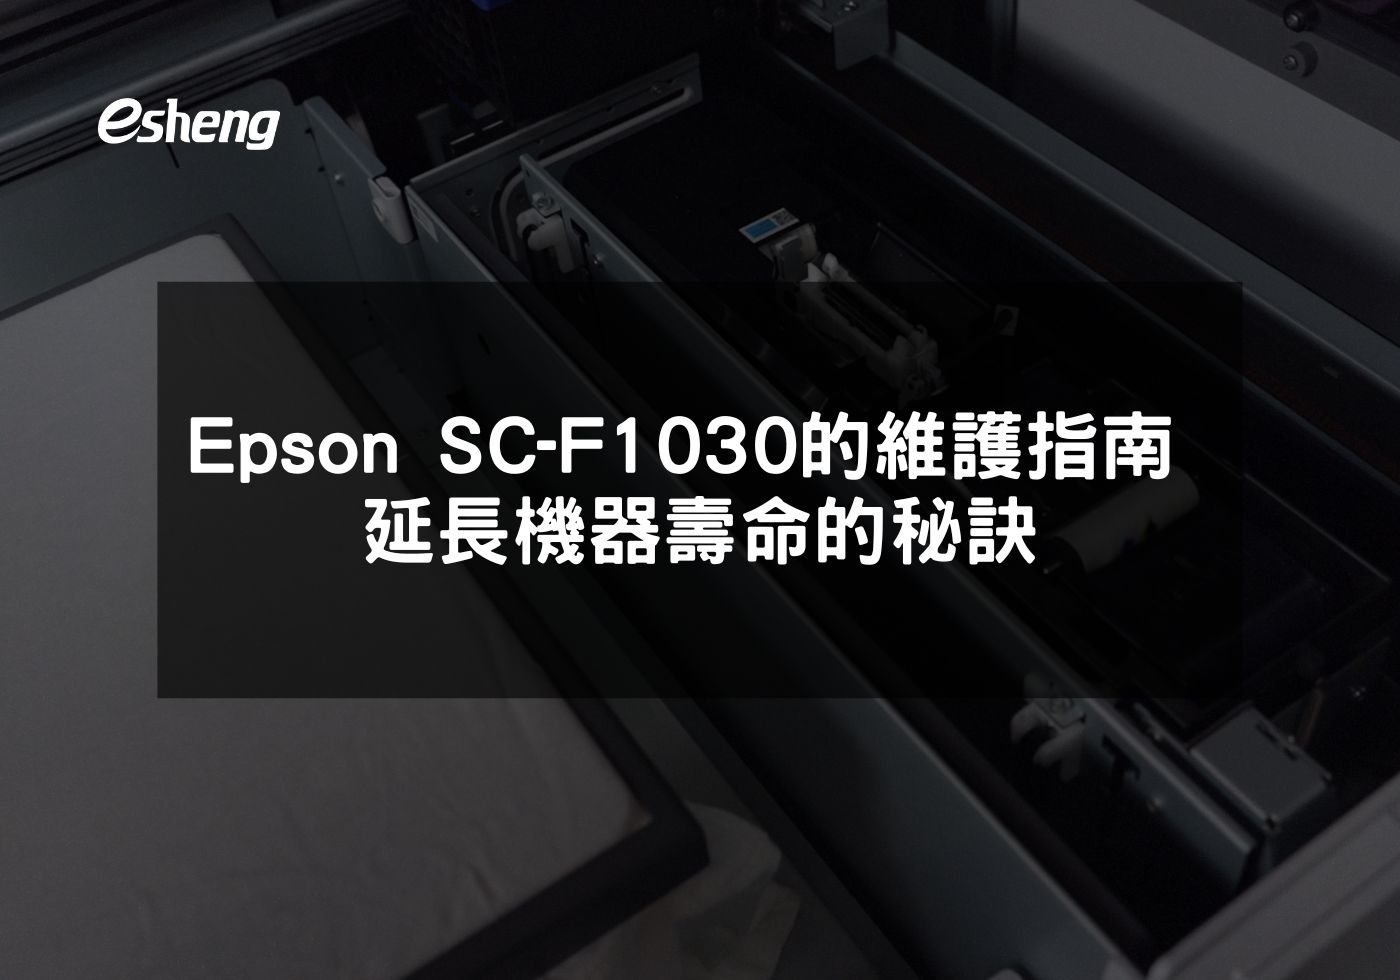 Epson SC-F1030的維護指南 延長機器壽命的秘訣